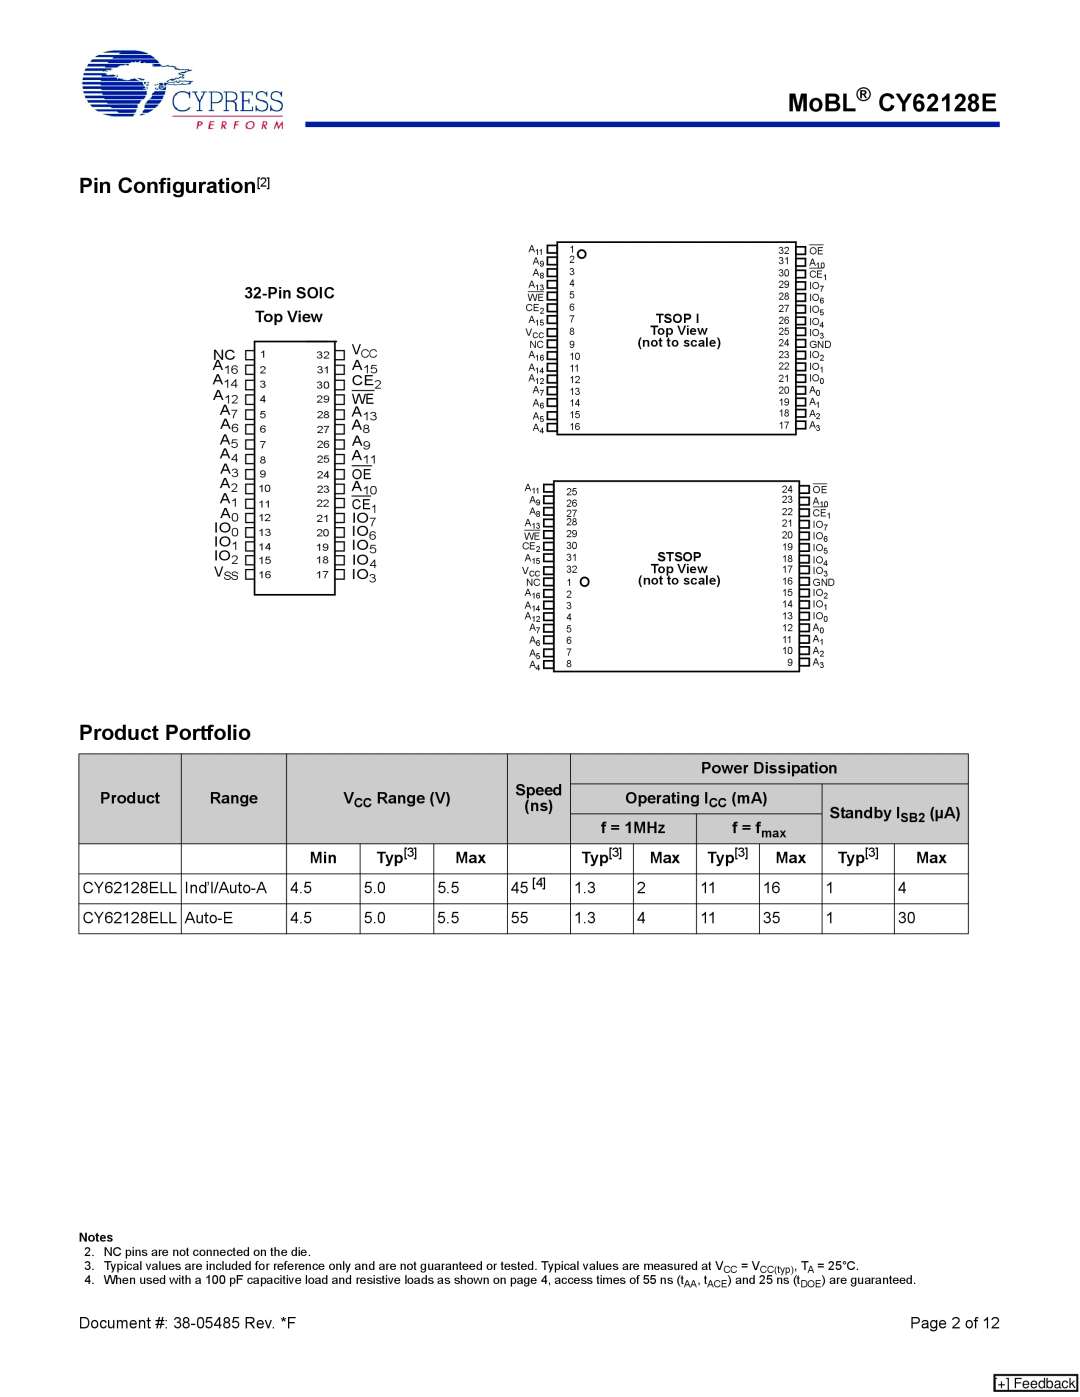 Cypress manual Pin Configuration2, Product Portfolio, MoBL CY62128E, A7 A6 A5 A4 A3 A2 A1 A0 IO0 IO1 IO2, CE2 WE, A8 A9 